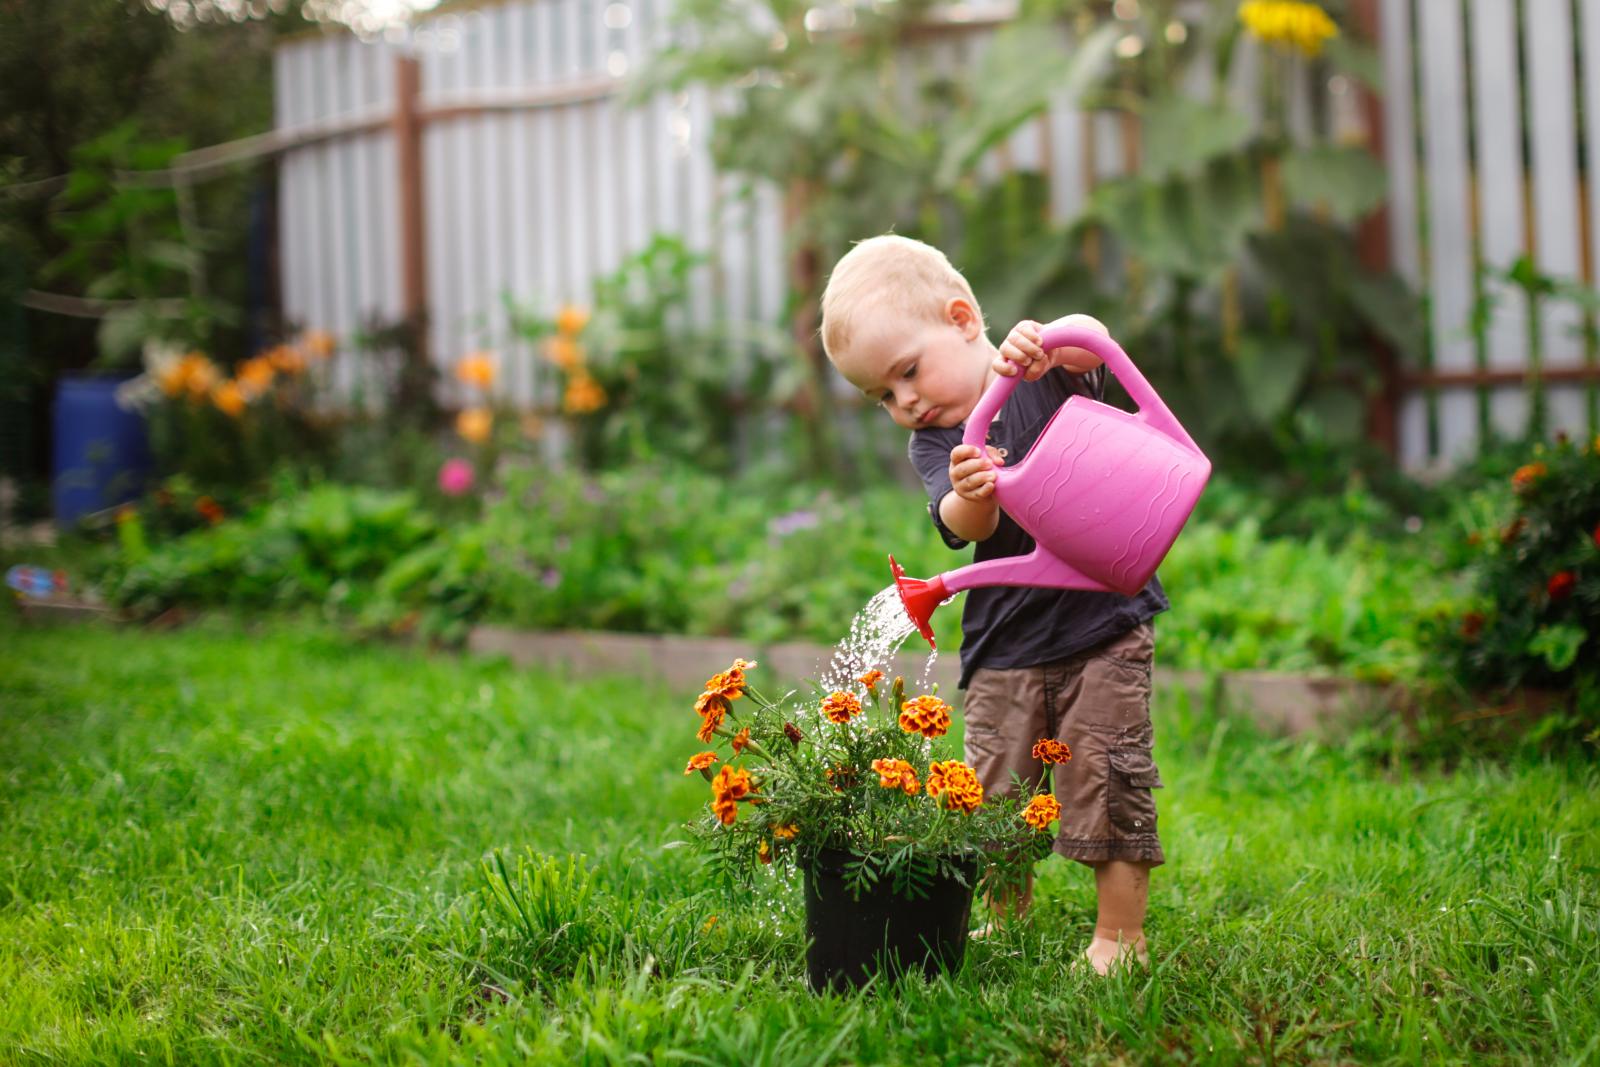 How to Get Children Interested in Gardening